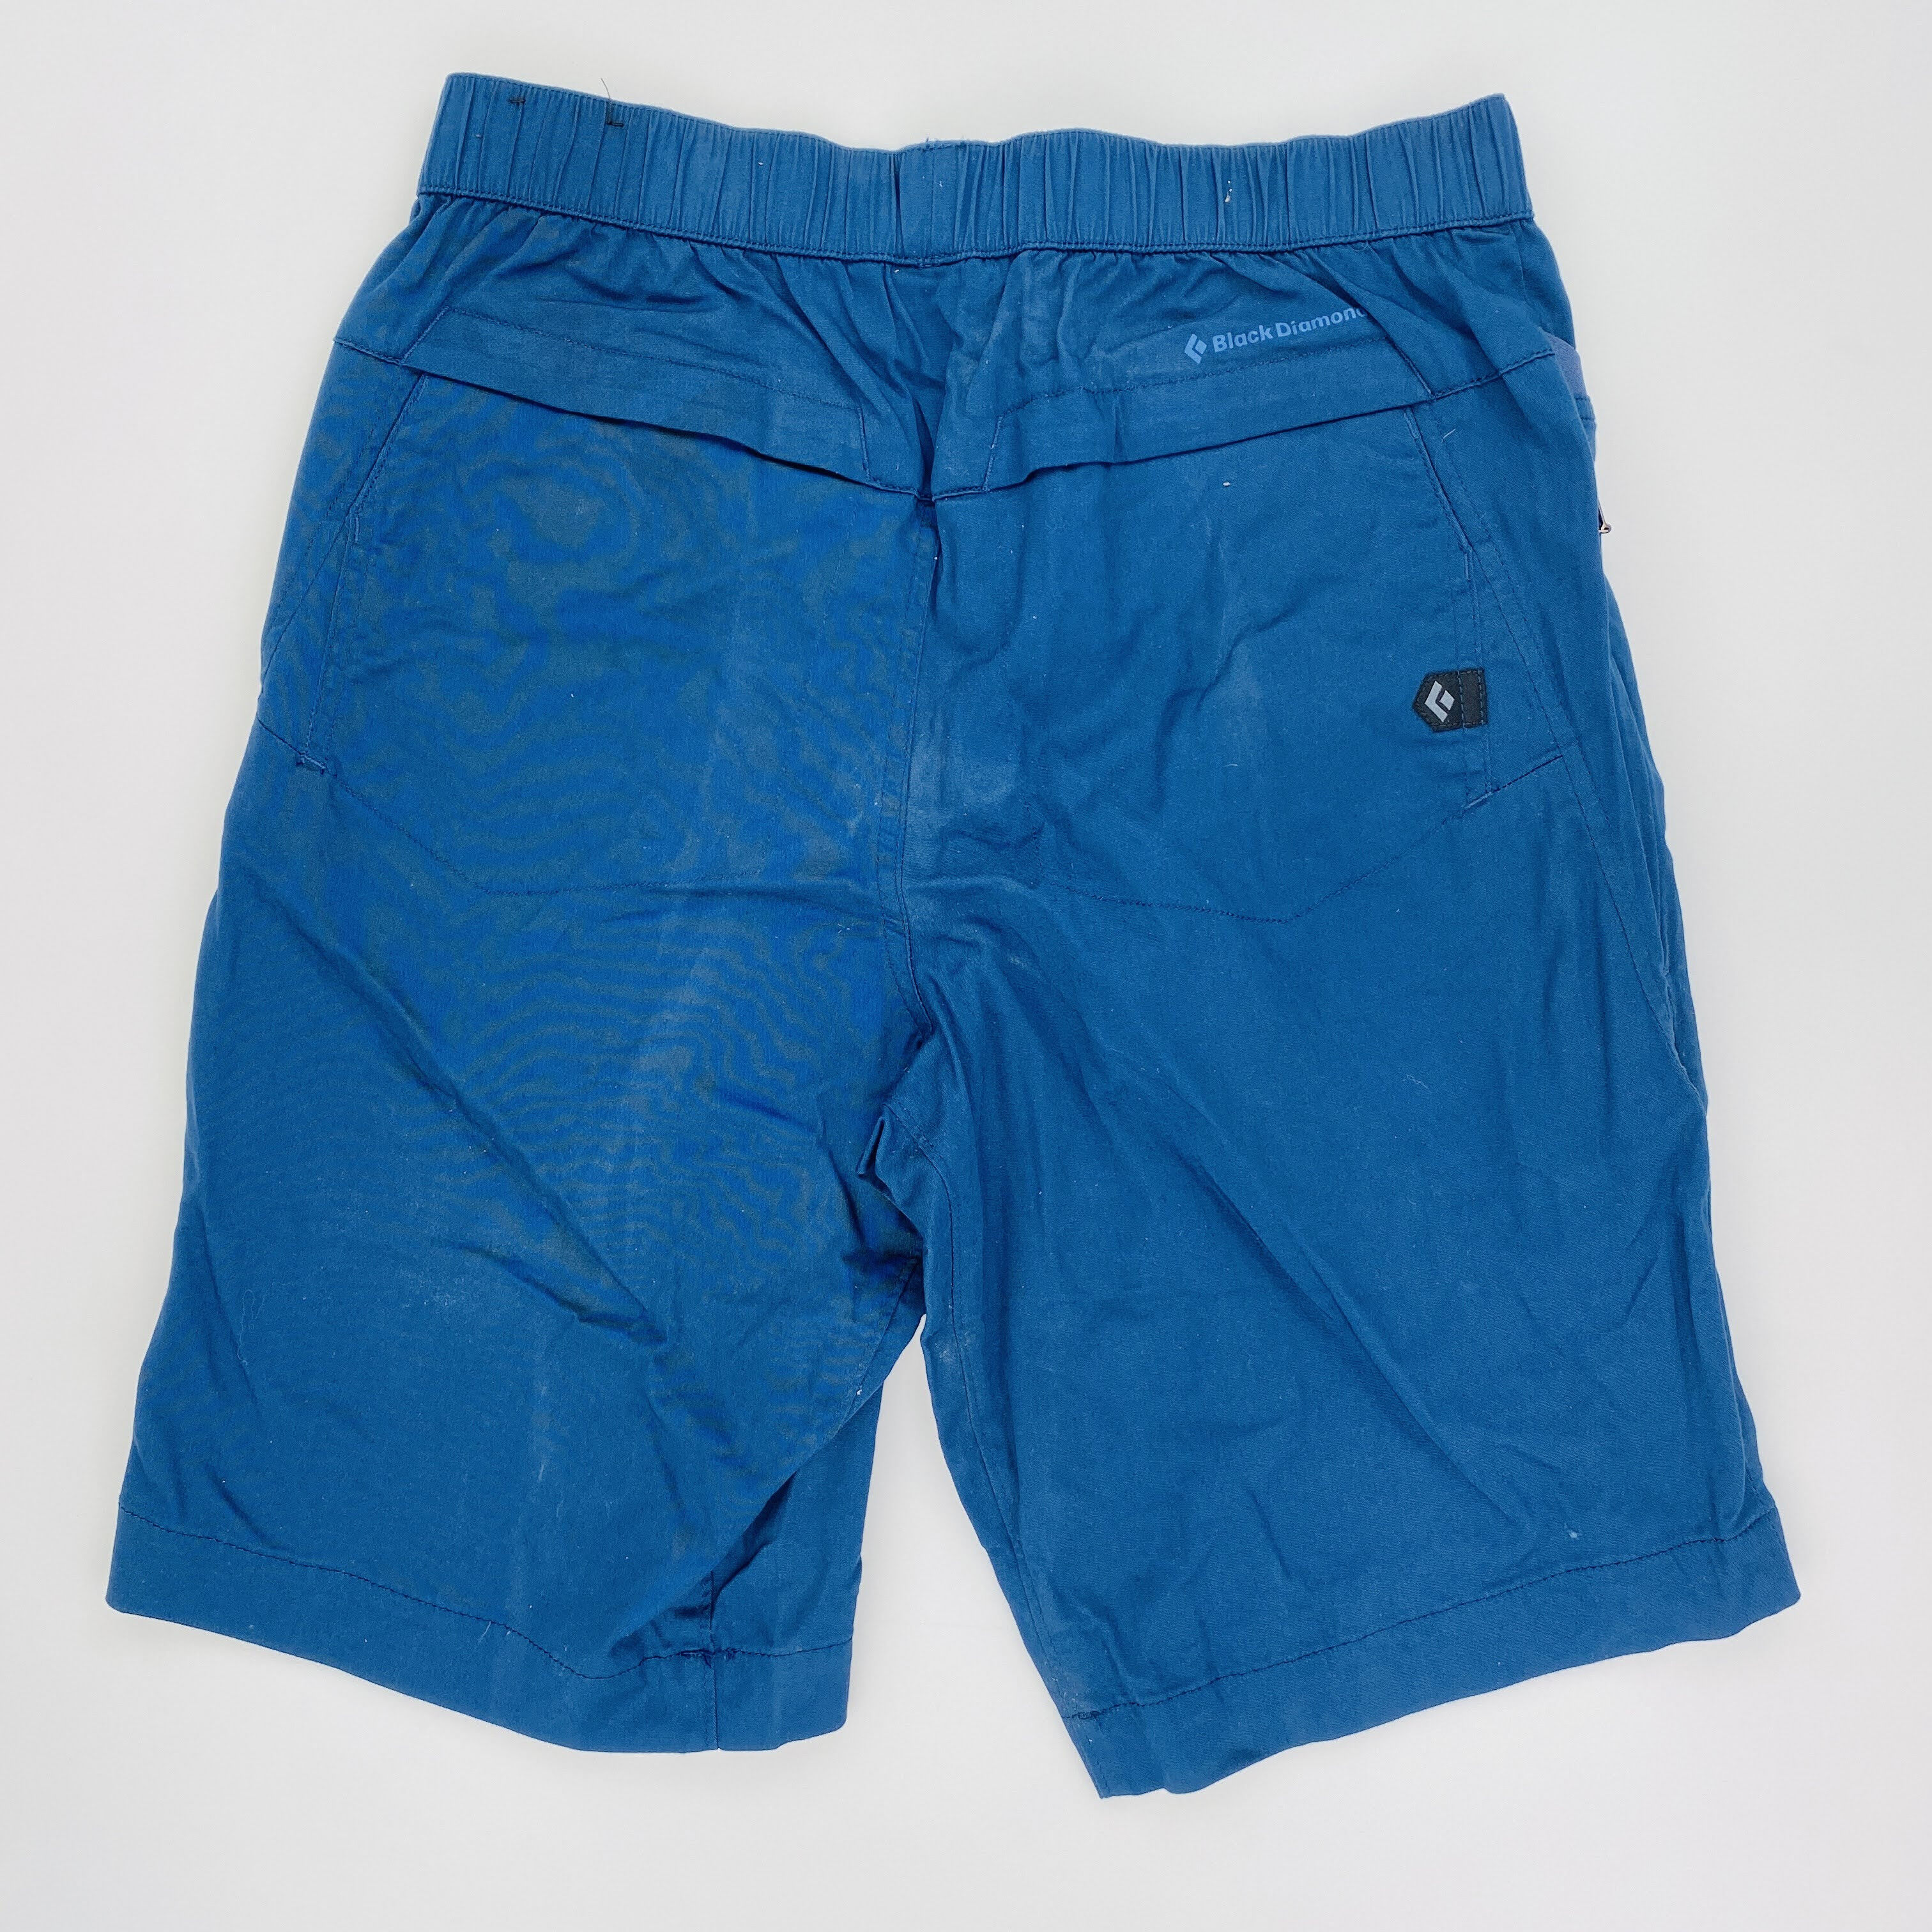 Black Diamond Notion Shorts - Pantaloncini di seconda mano - Uomo - Blu - S | Hardloop